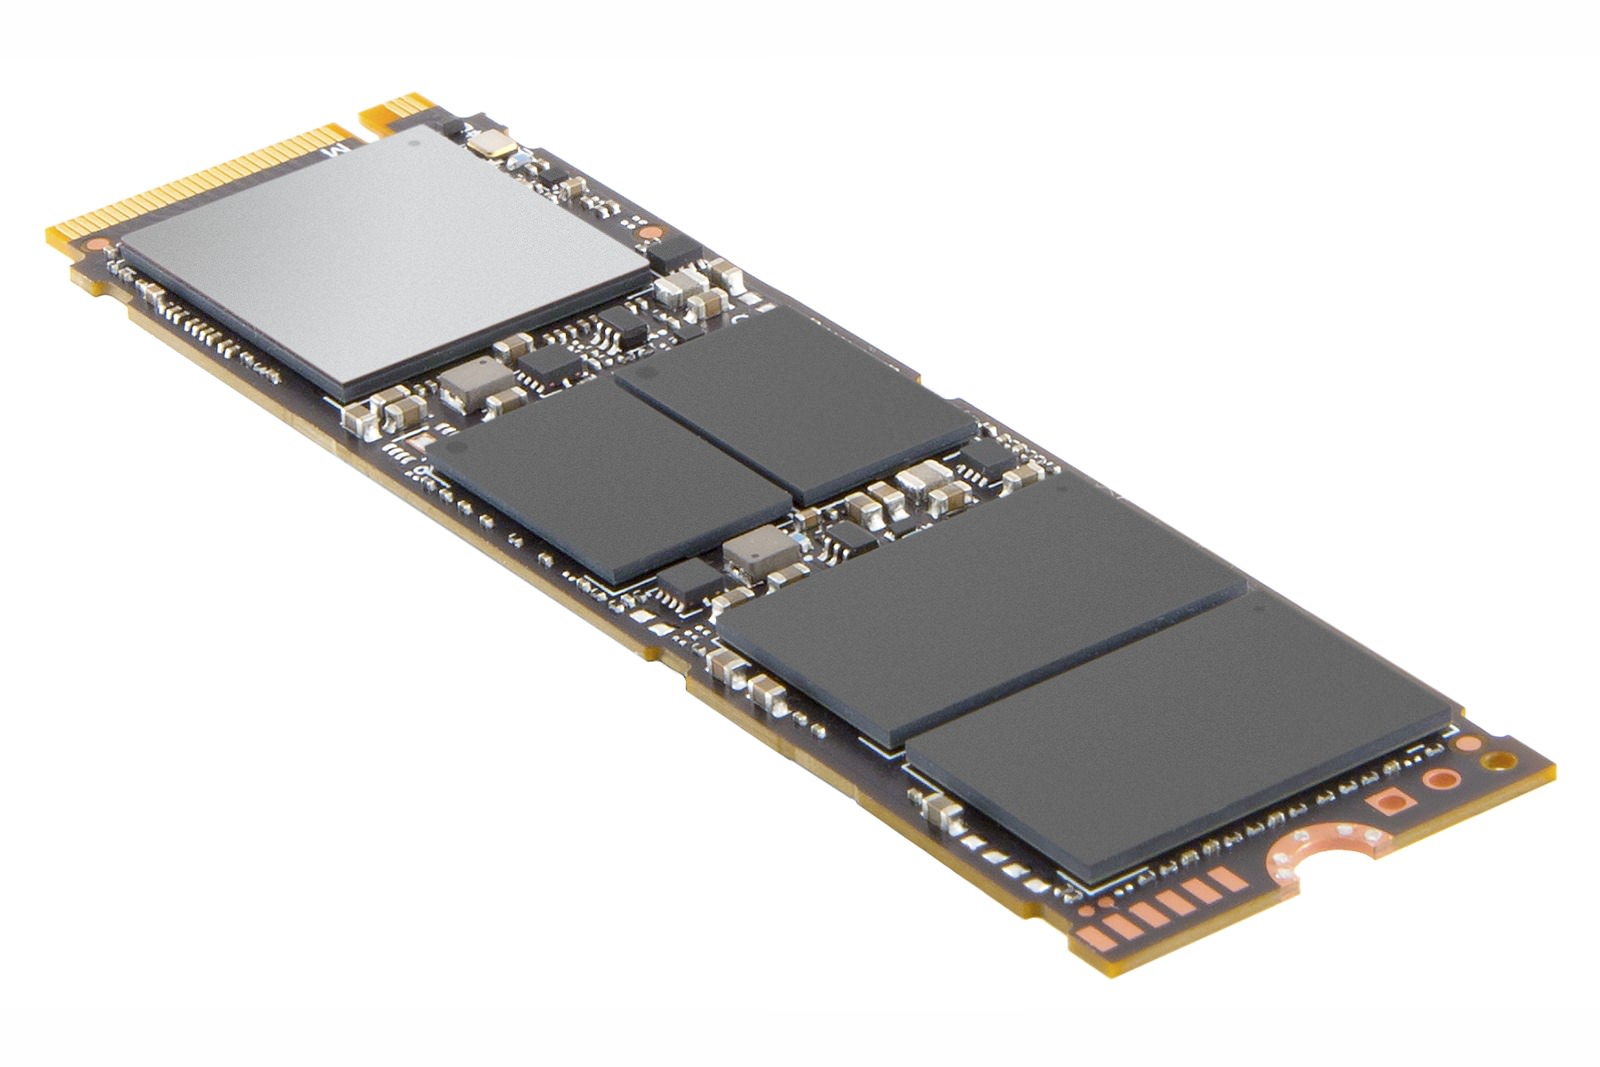 Intel SSD Pro 7600p SSDPEKKF256G8X1 256GB M.2 80mm - image 1 of 1